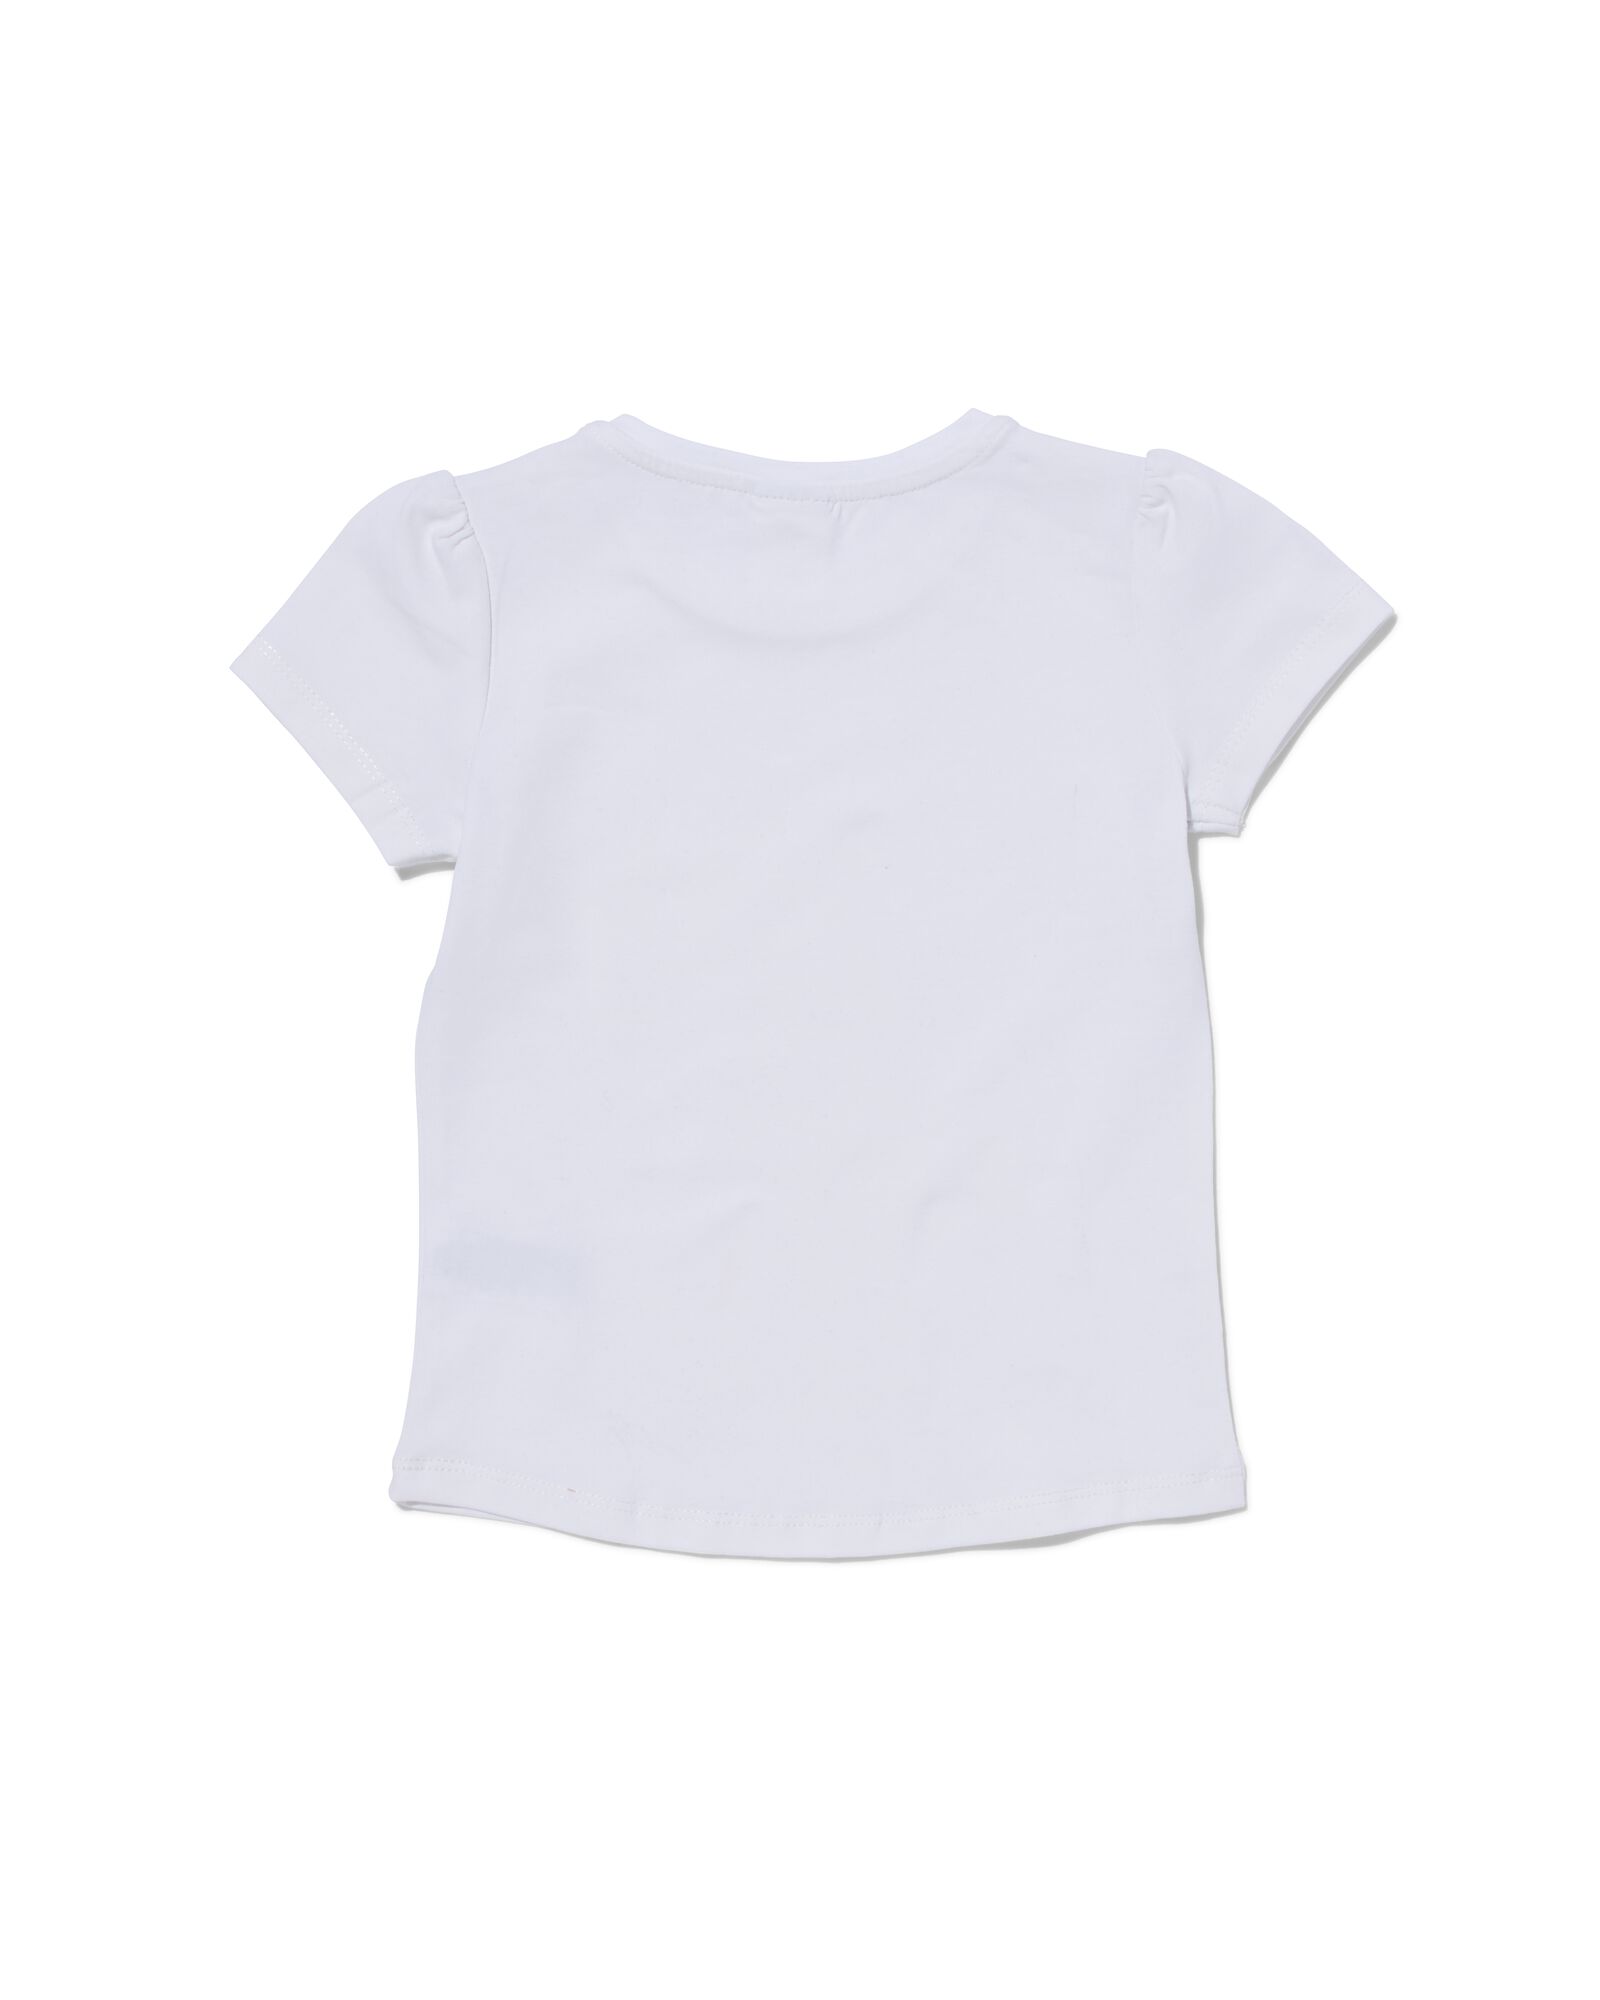 kinder t-shirts - 2 stuks wit 98/104 - 30843931 - HEMA